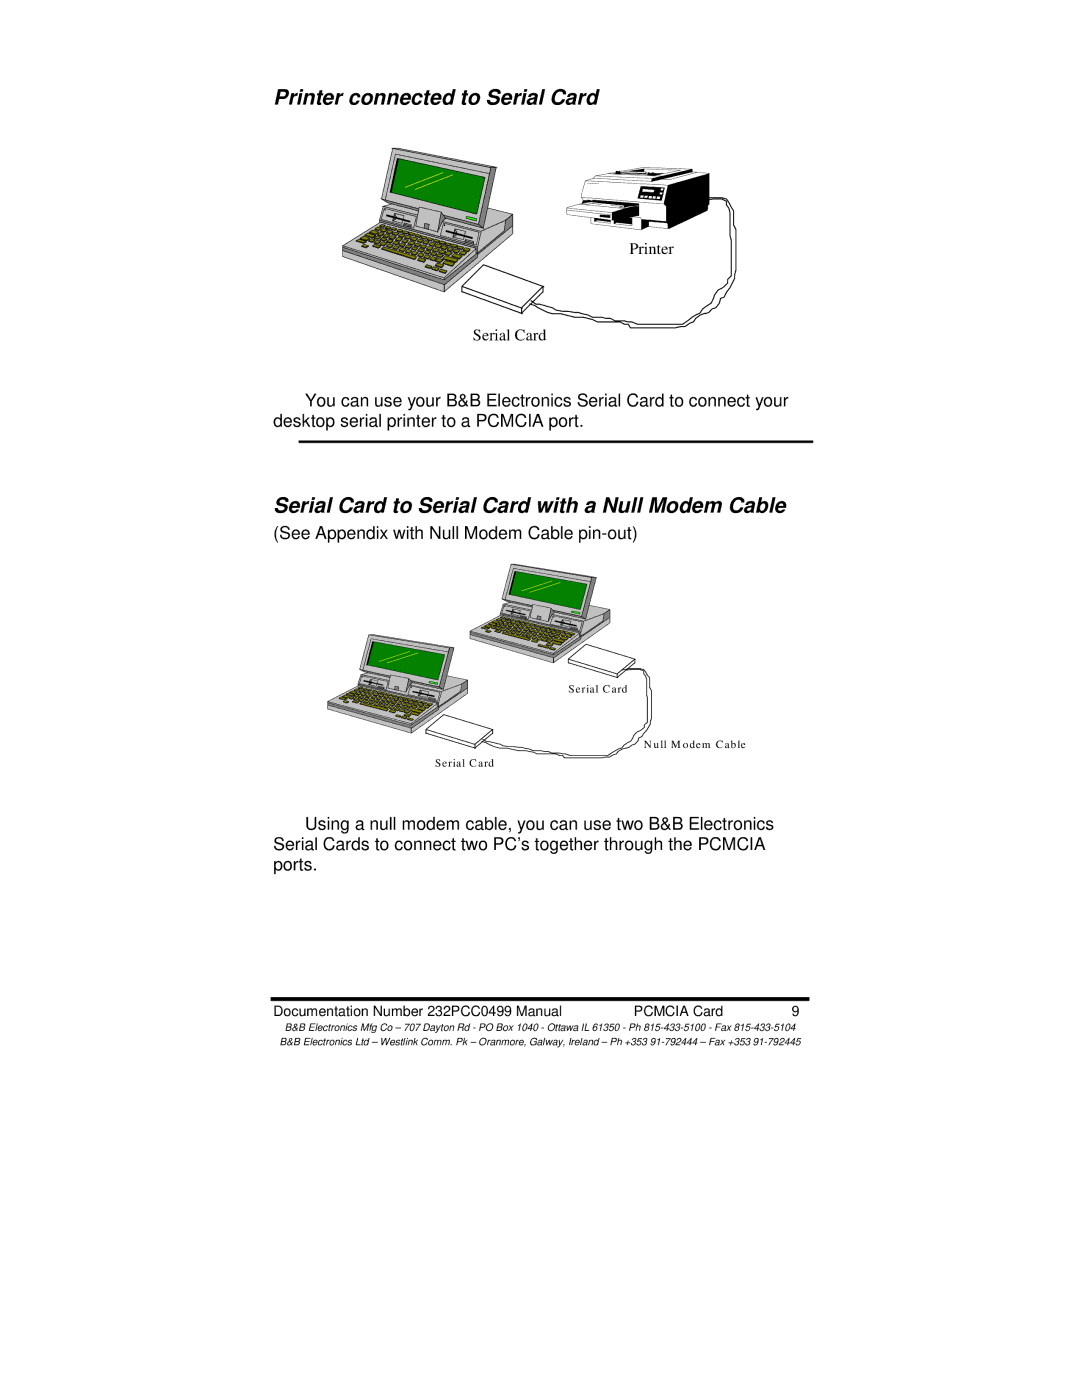 B&B Electronics 232PCC manual Printer connected to Serial Card, Serial Card to Serial Card with a Null Modem Cable 